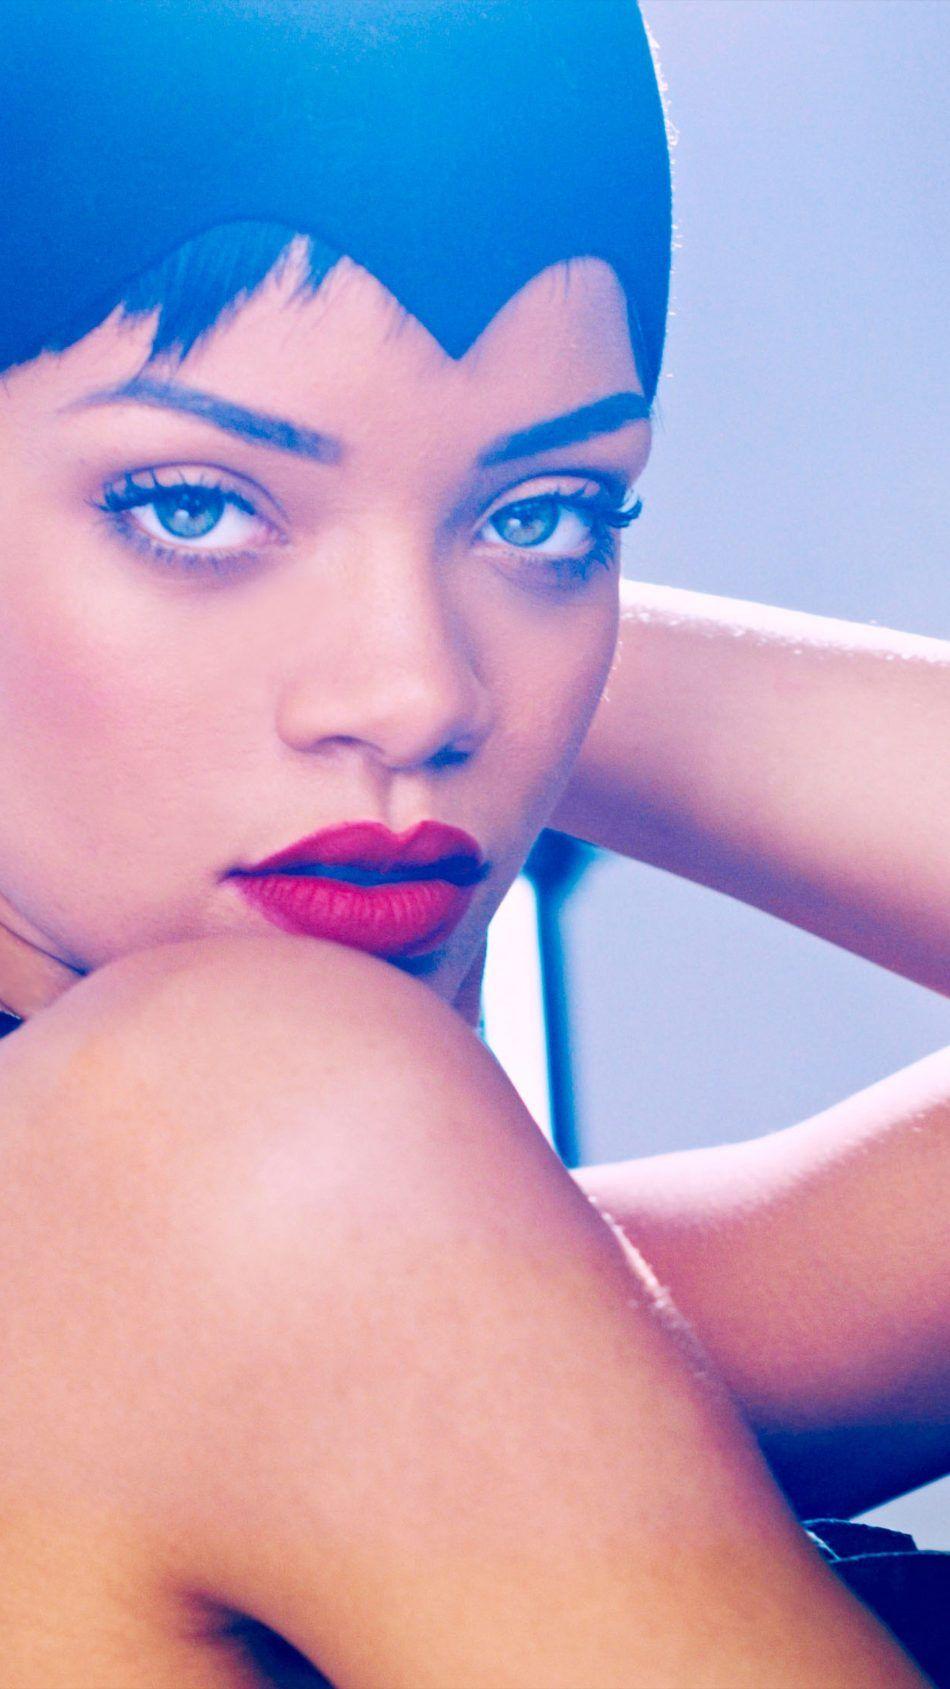 Rihanna 2019. Music wallpaper, Rihanna, Mobile wallpaper